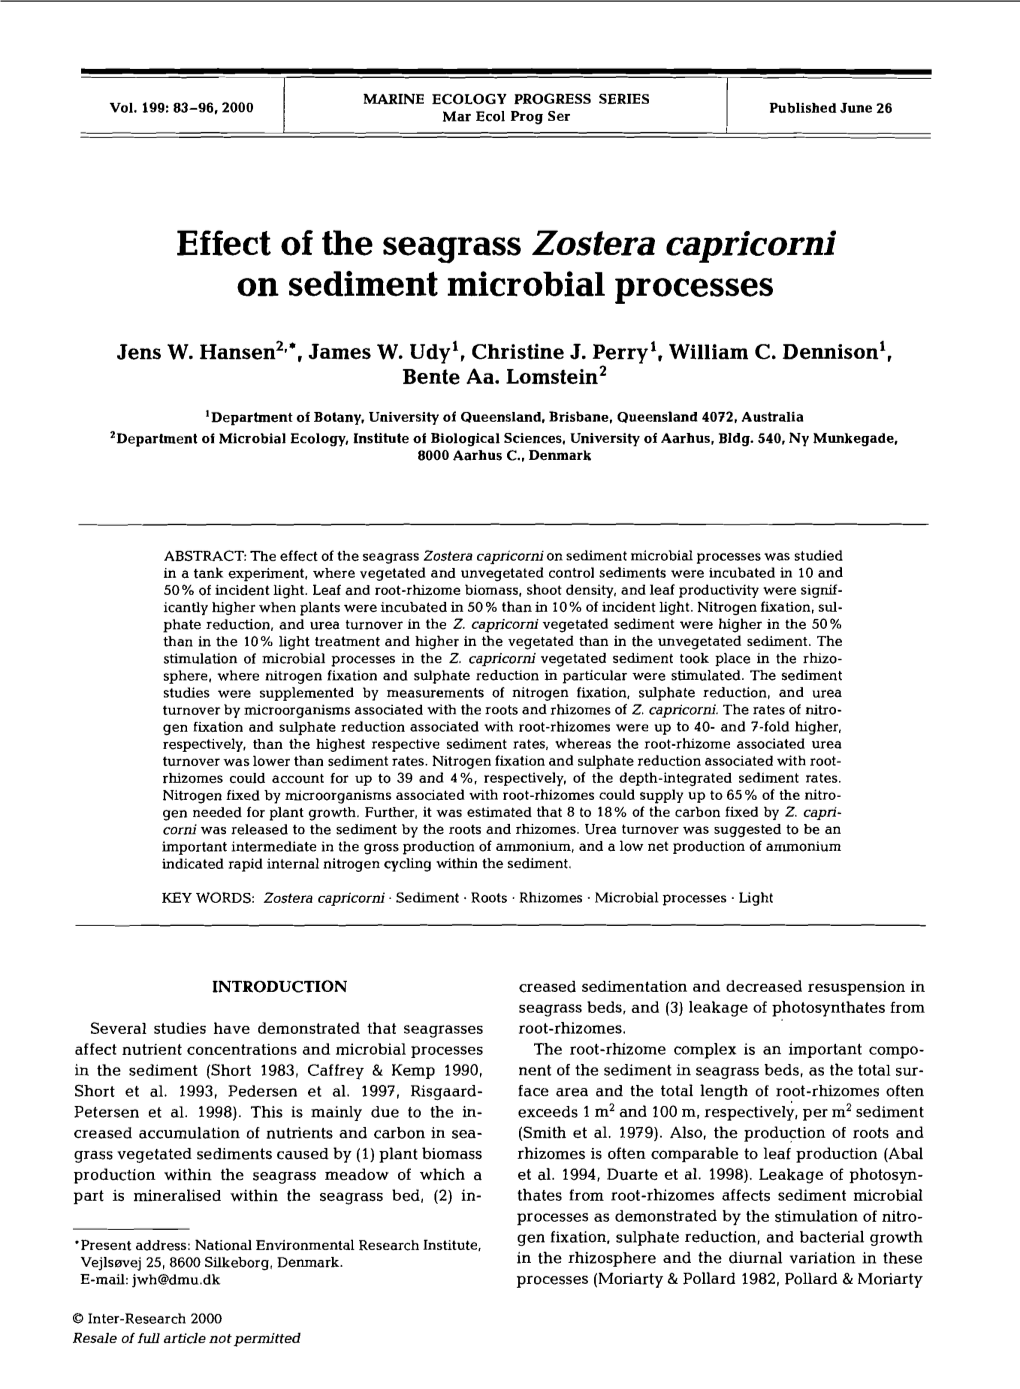 Effect of the Seagrass Zostera Capricorni on Sediment Microbial Processes